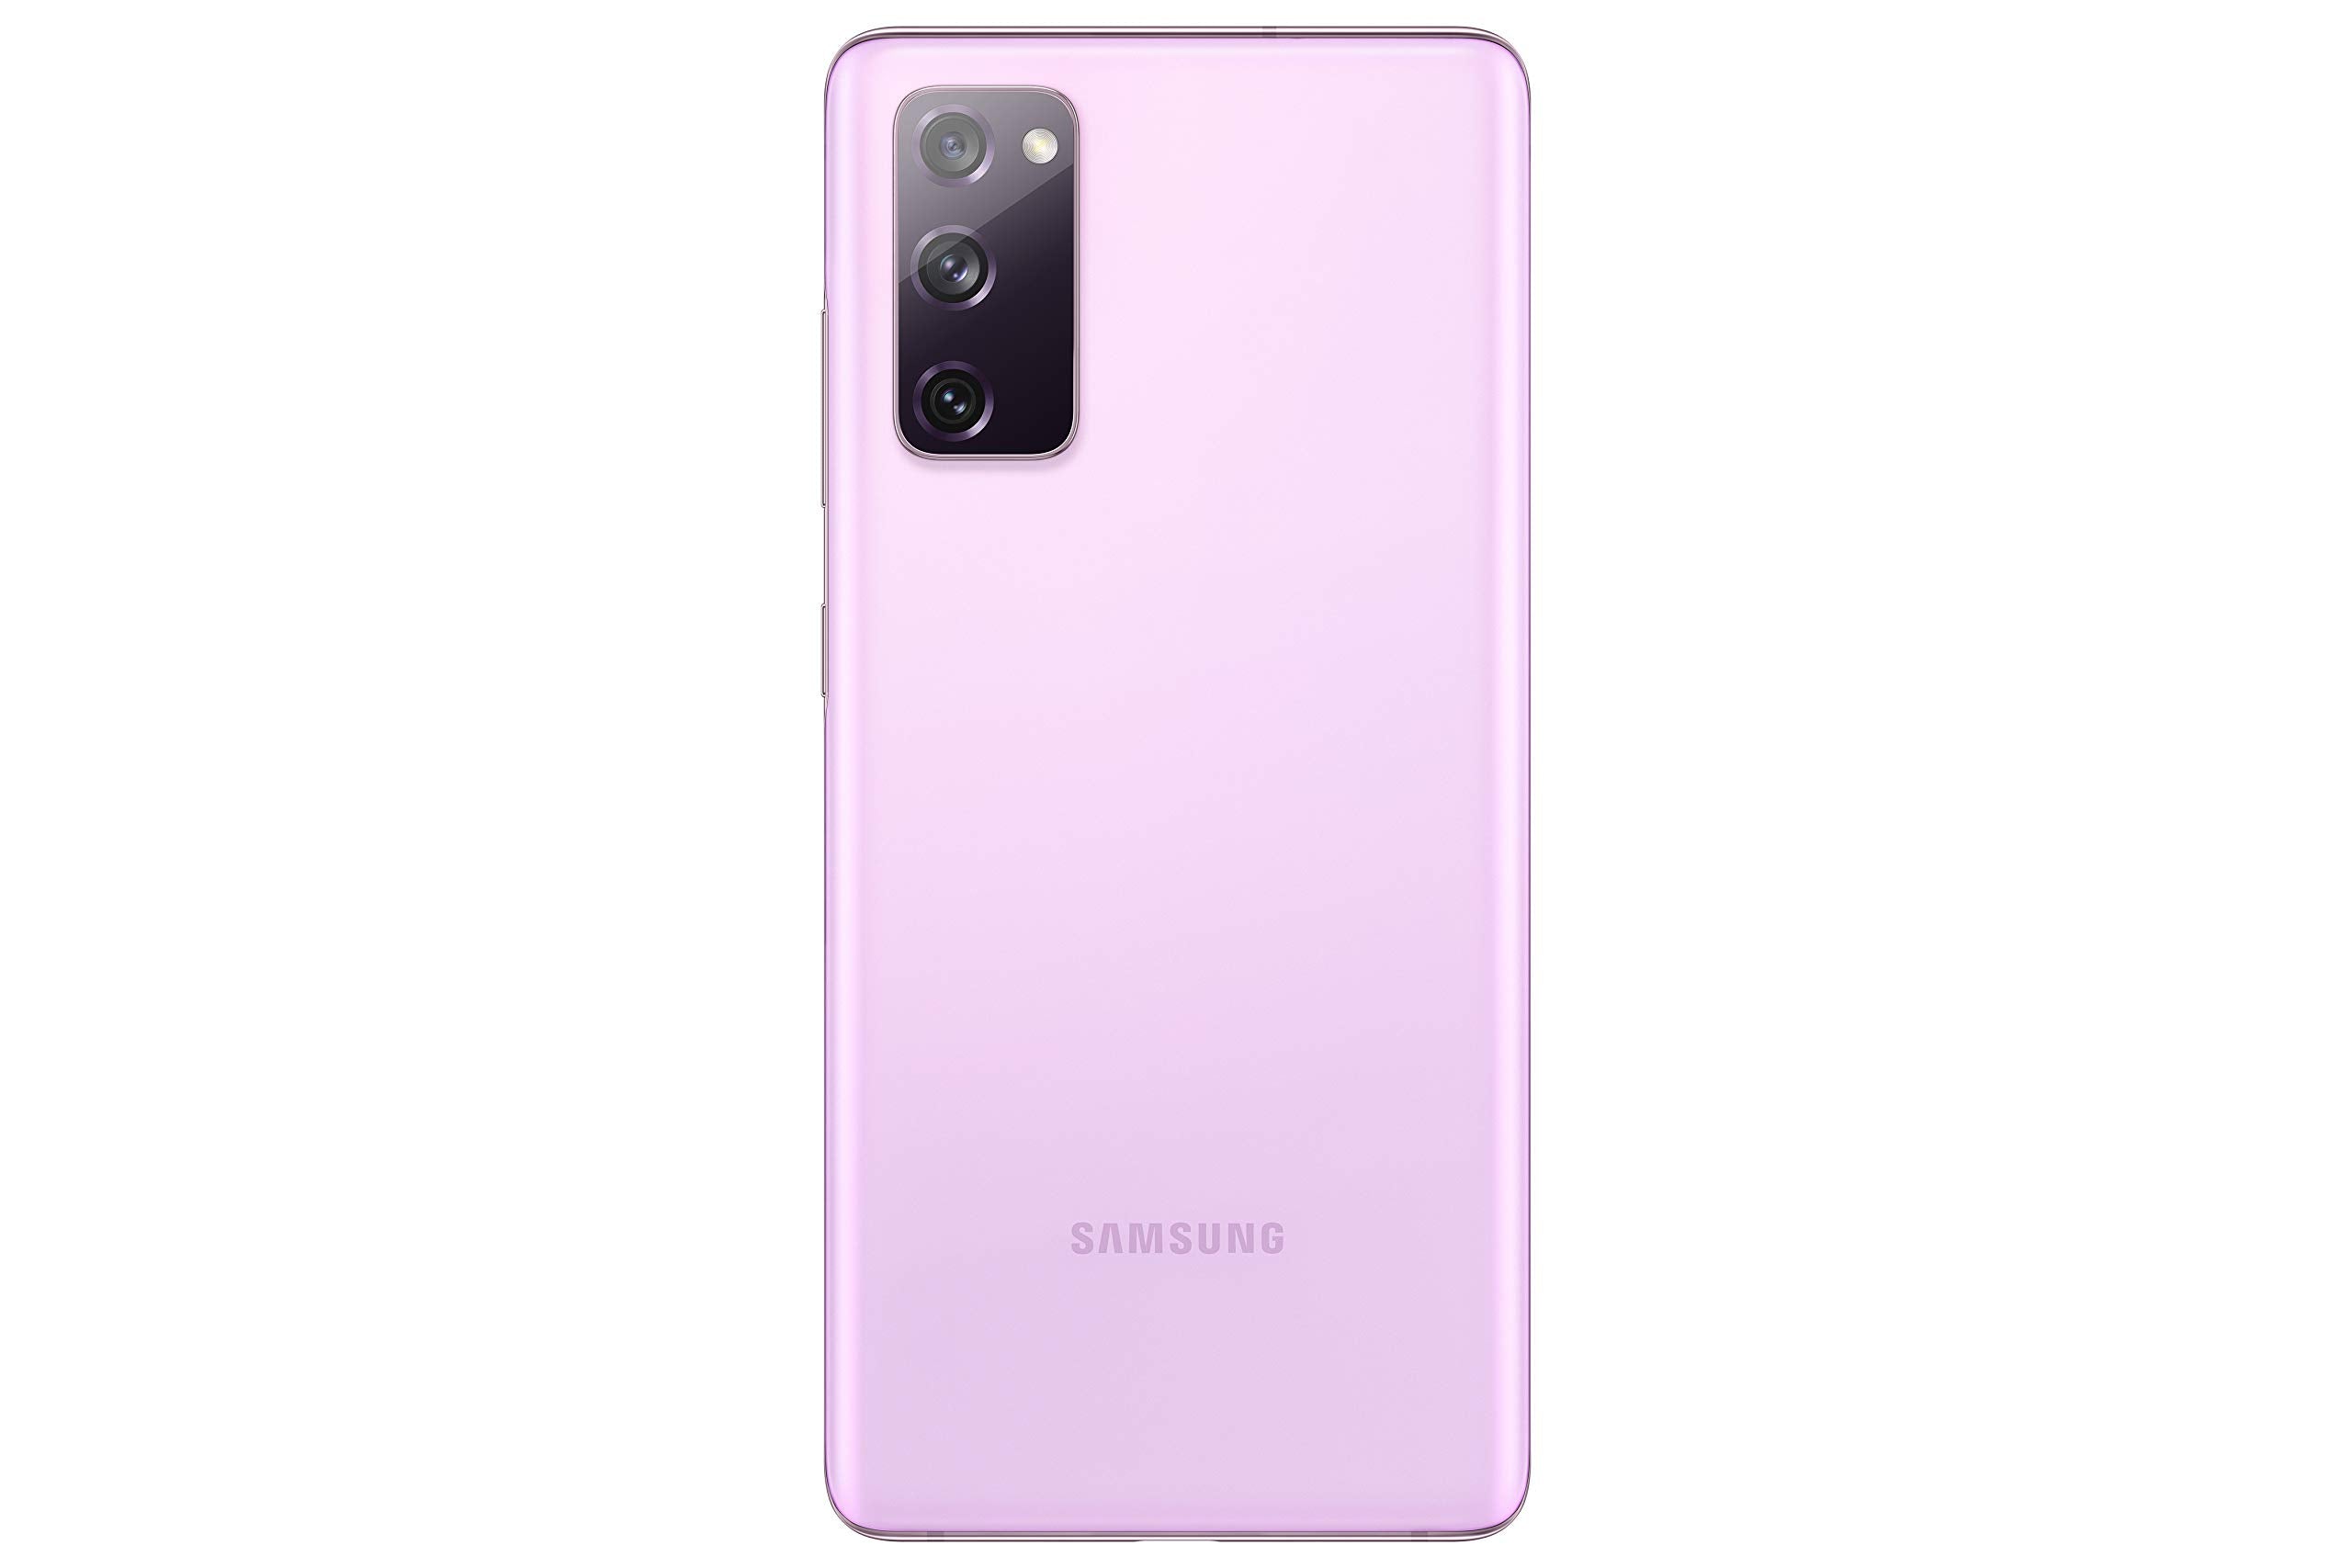 Samsung Galaxy S20 FE Mobile Phone; Sim Free Smartphone - 128 GB - Cloud Lavender (UK Version)